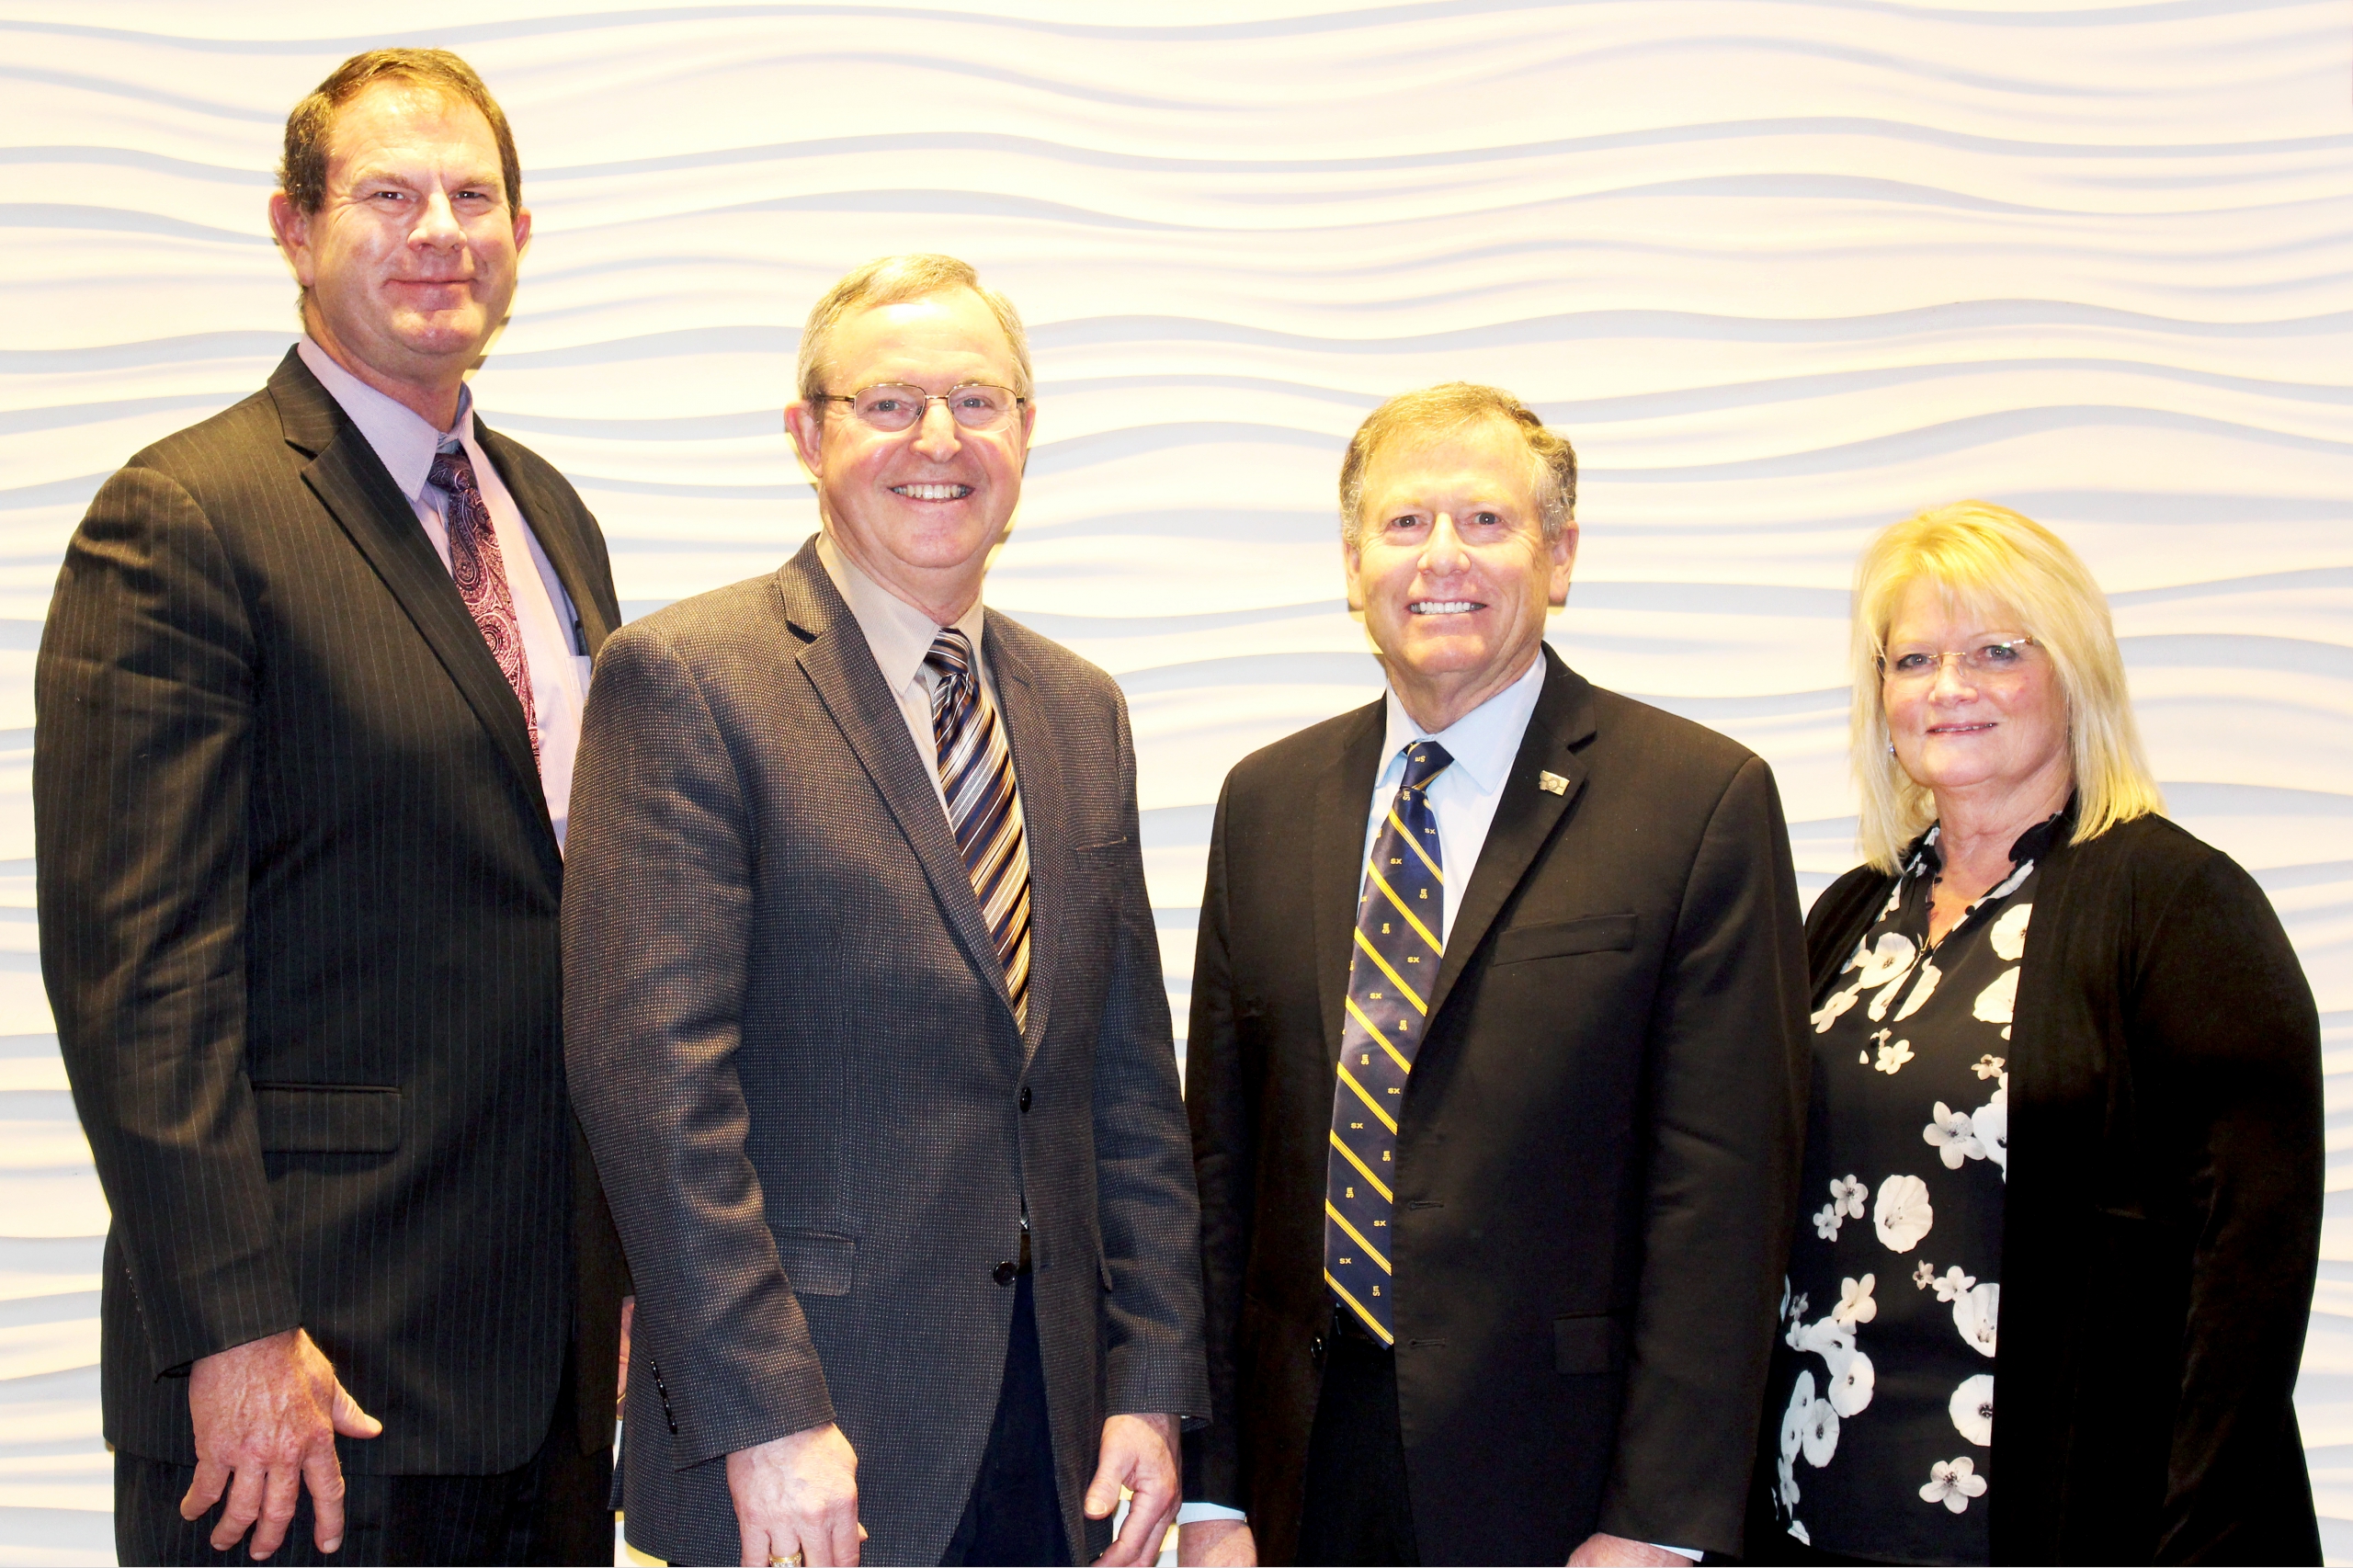 Left to right: Darren Padget, Secretary-Treasurer; Doug Goyings, Vice Chairman; Chris Kolstad, Chairman; and Rhonda Larson, Secretary-Treasurer Elect.